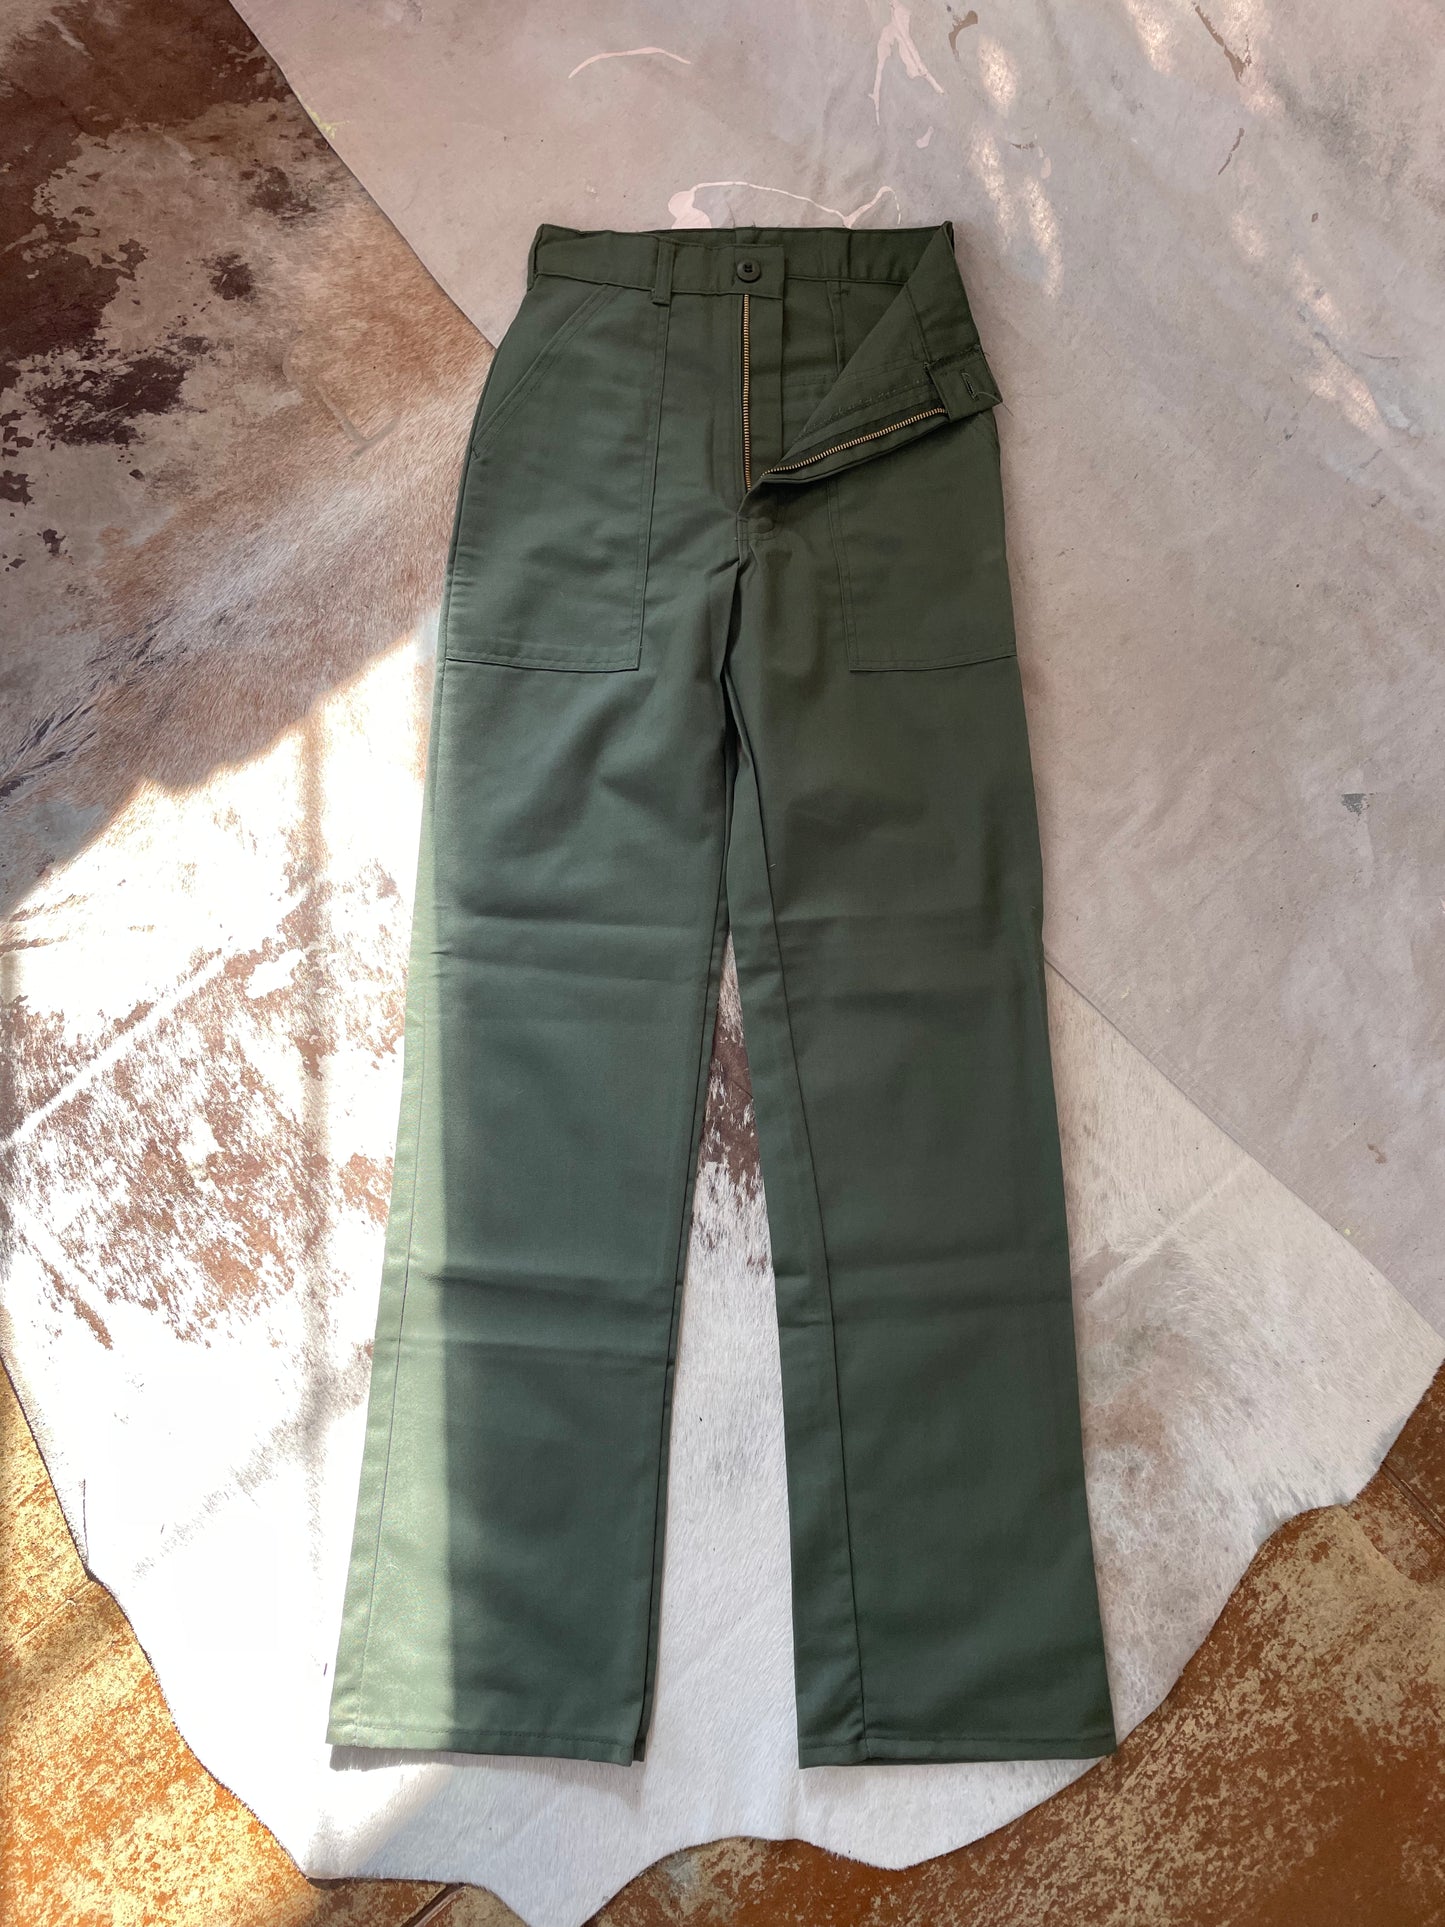 70s Army Fatigue Pants